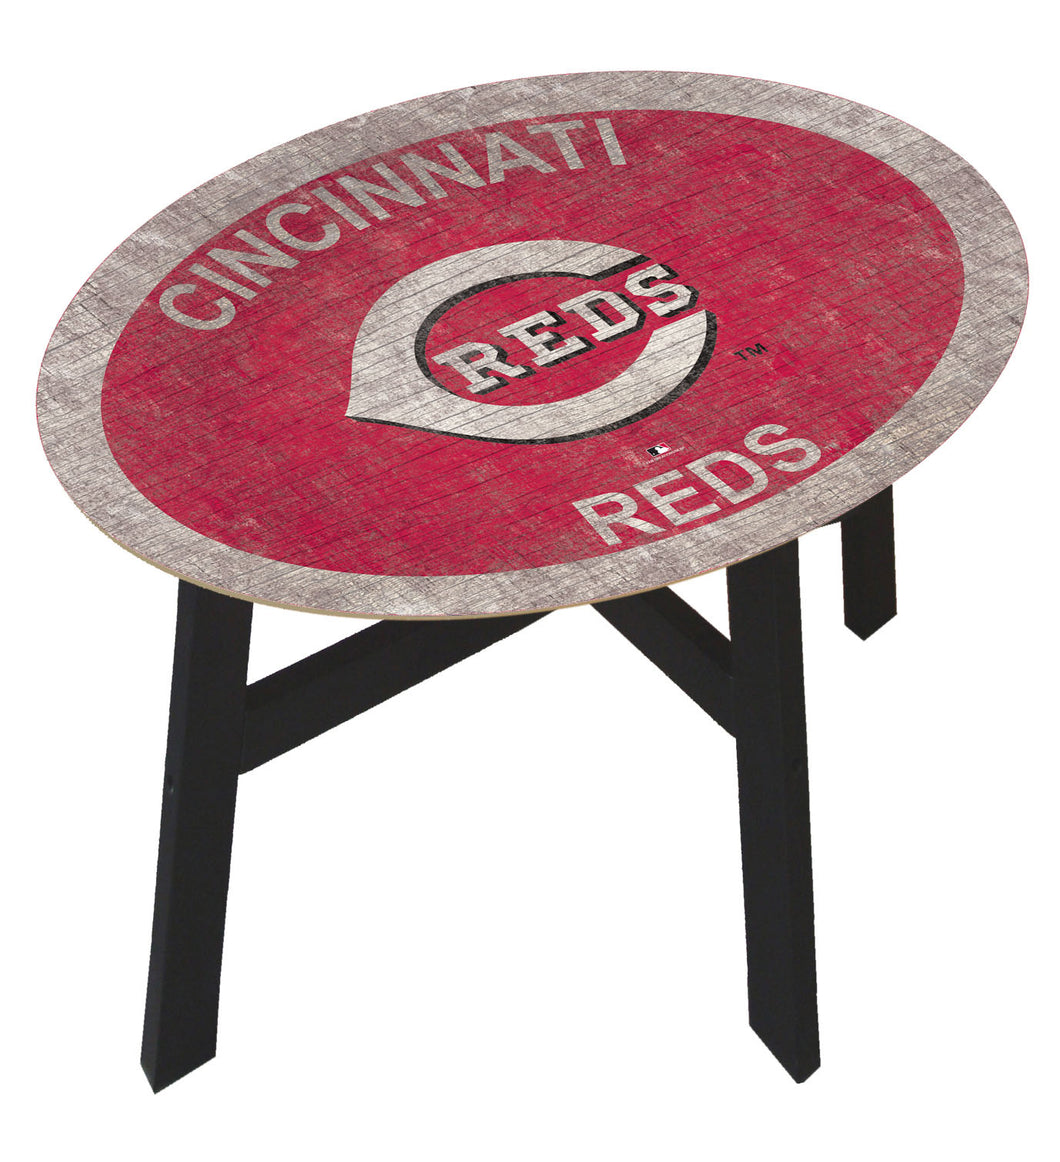 Cincinnati Reds Team Color Wood Side Table